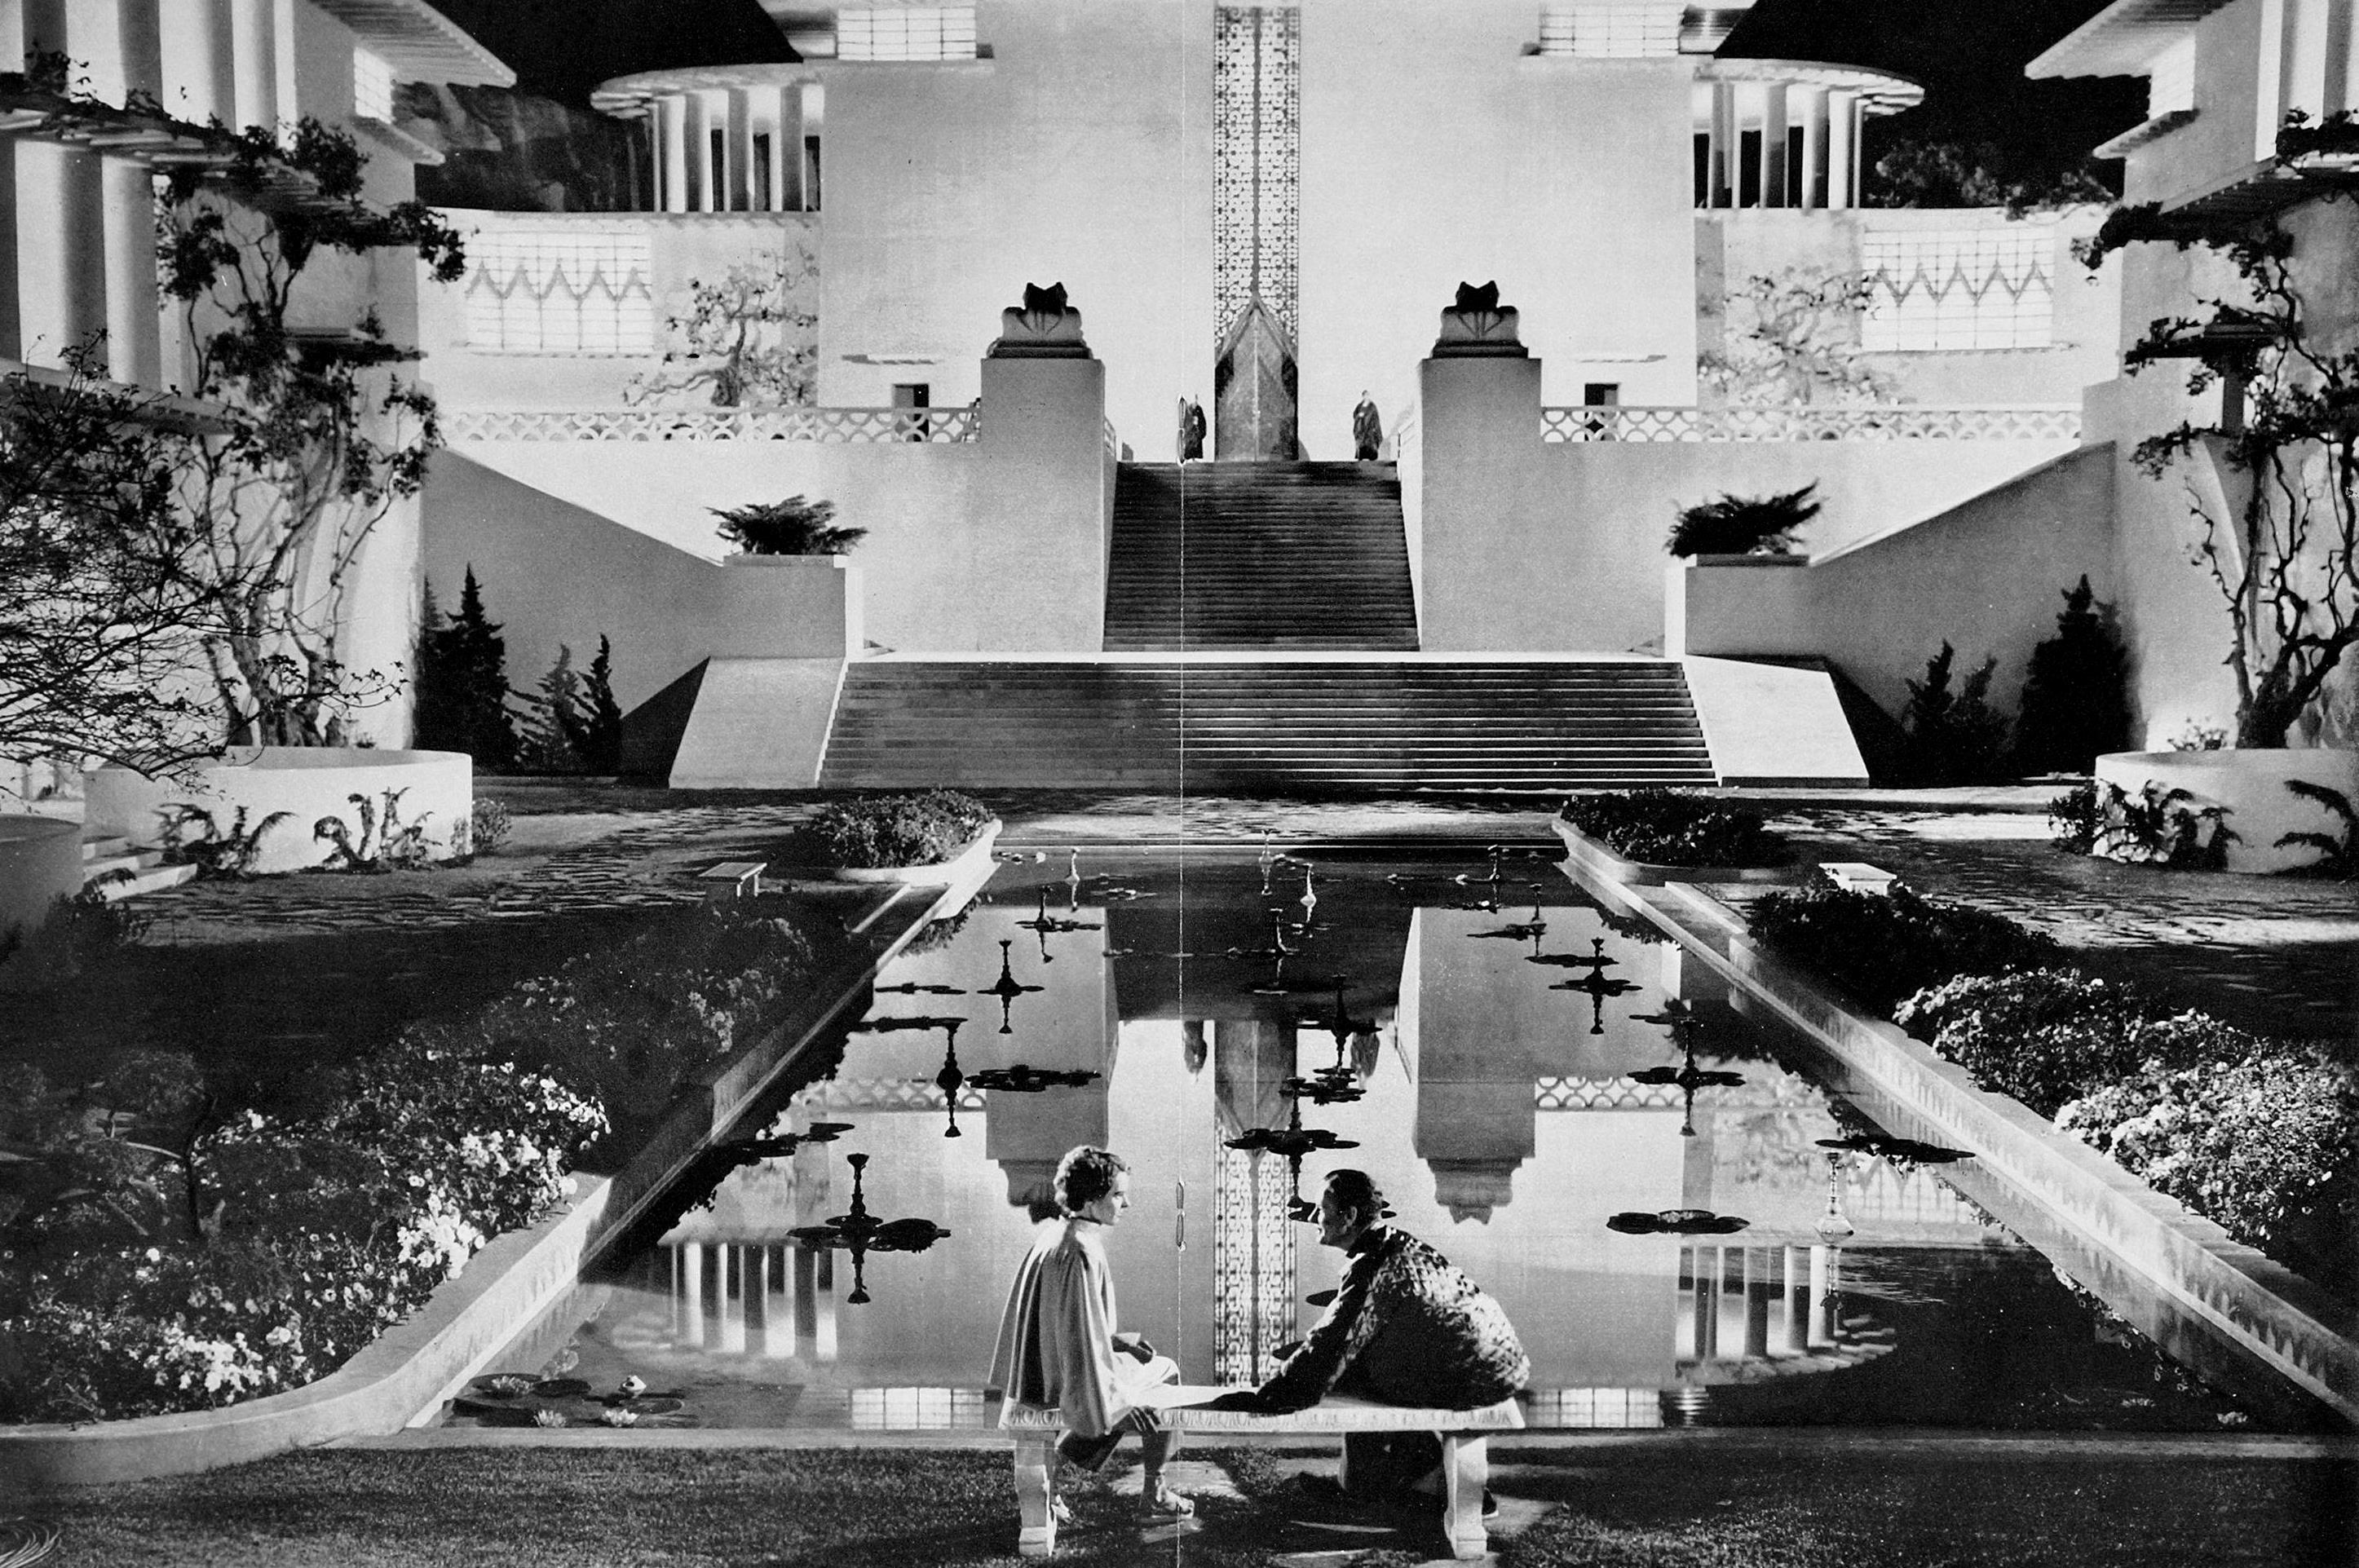 Jane Wyatt and Ronald Colman in Shangri-La in Lost Horizon (1937)